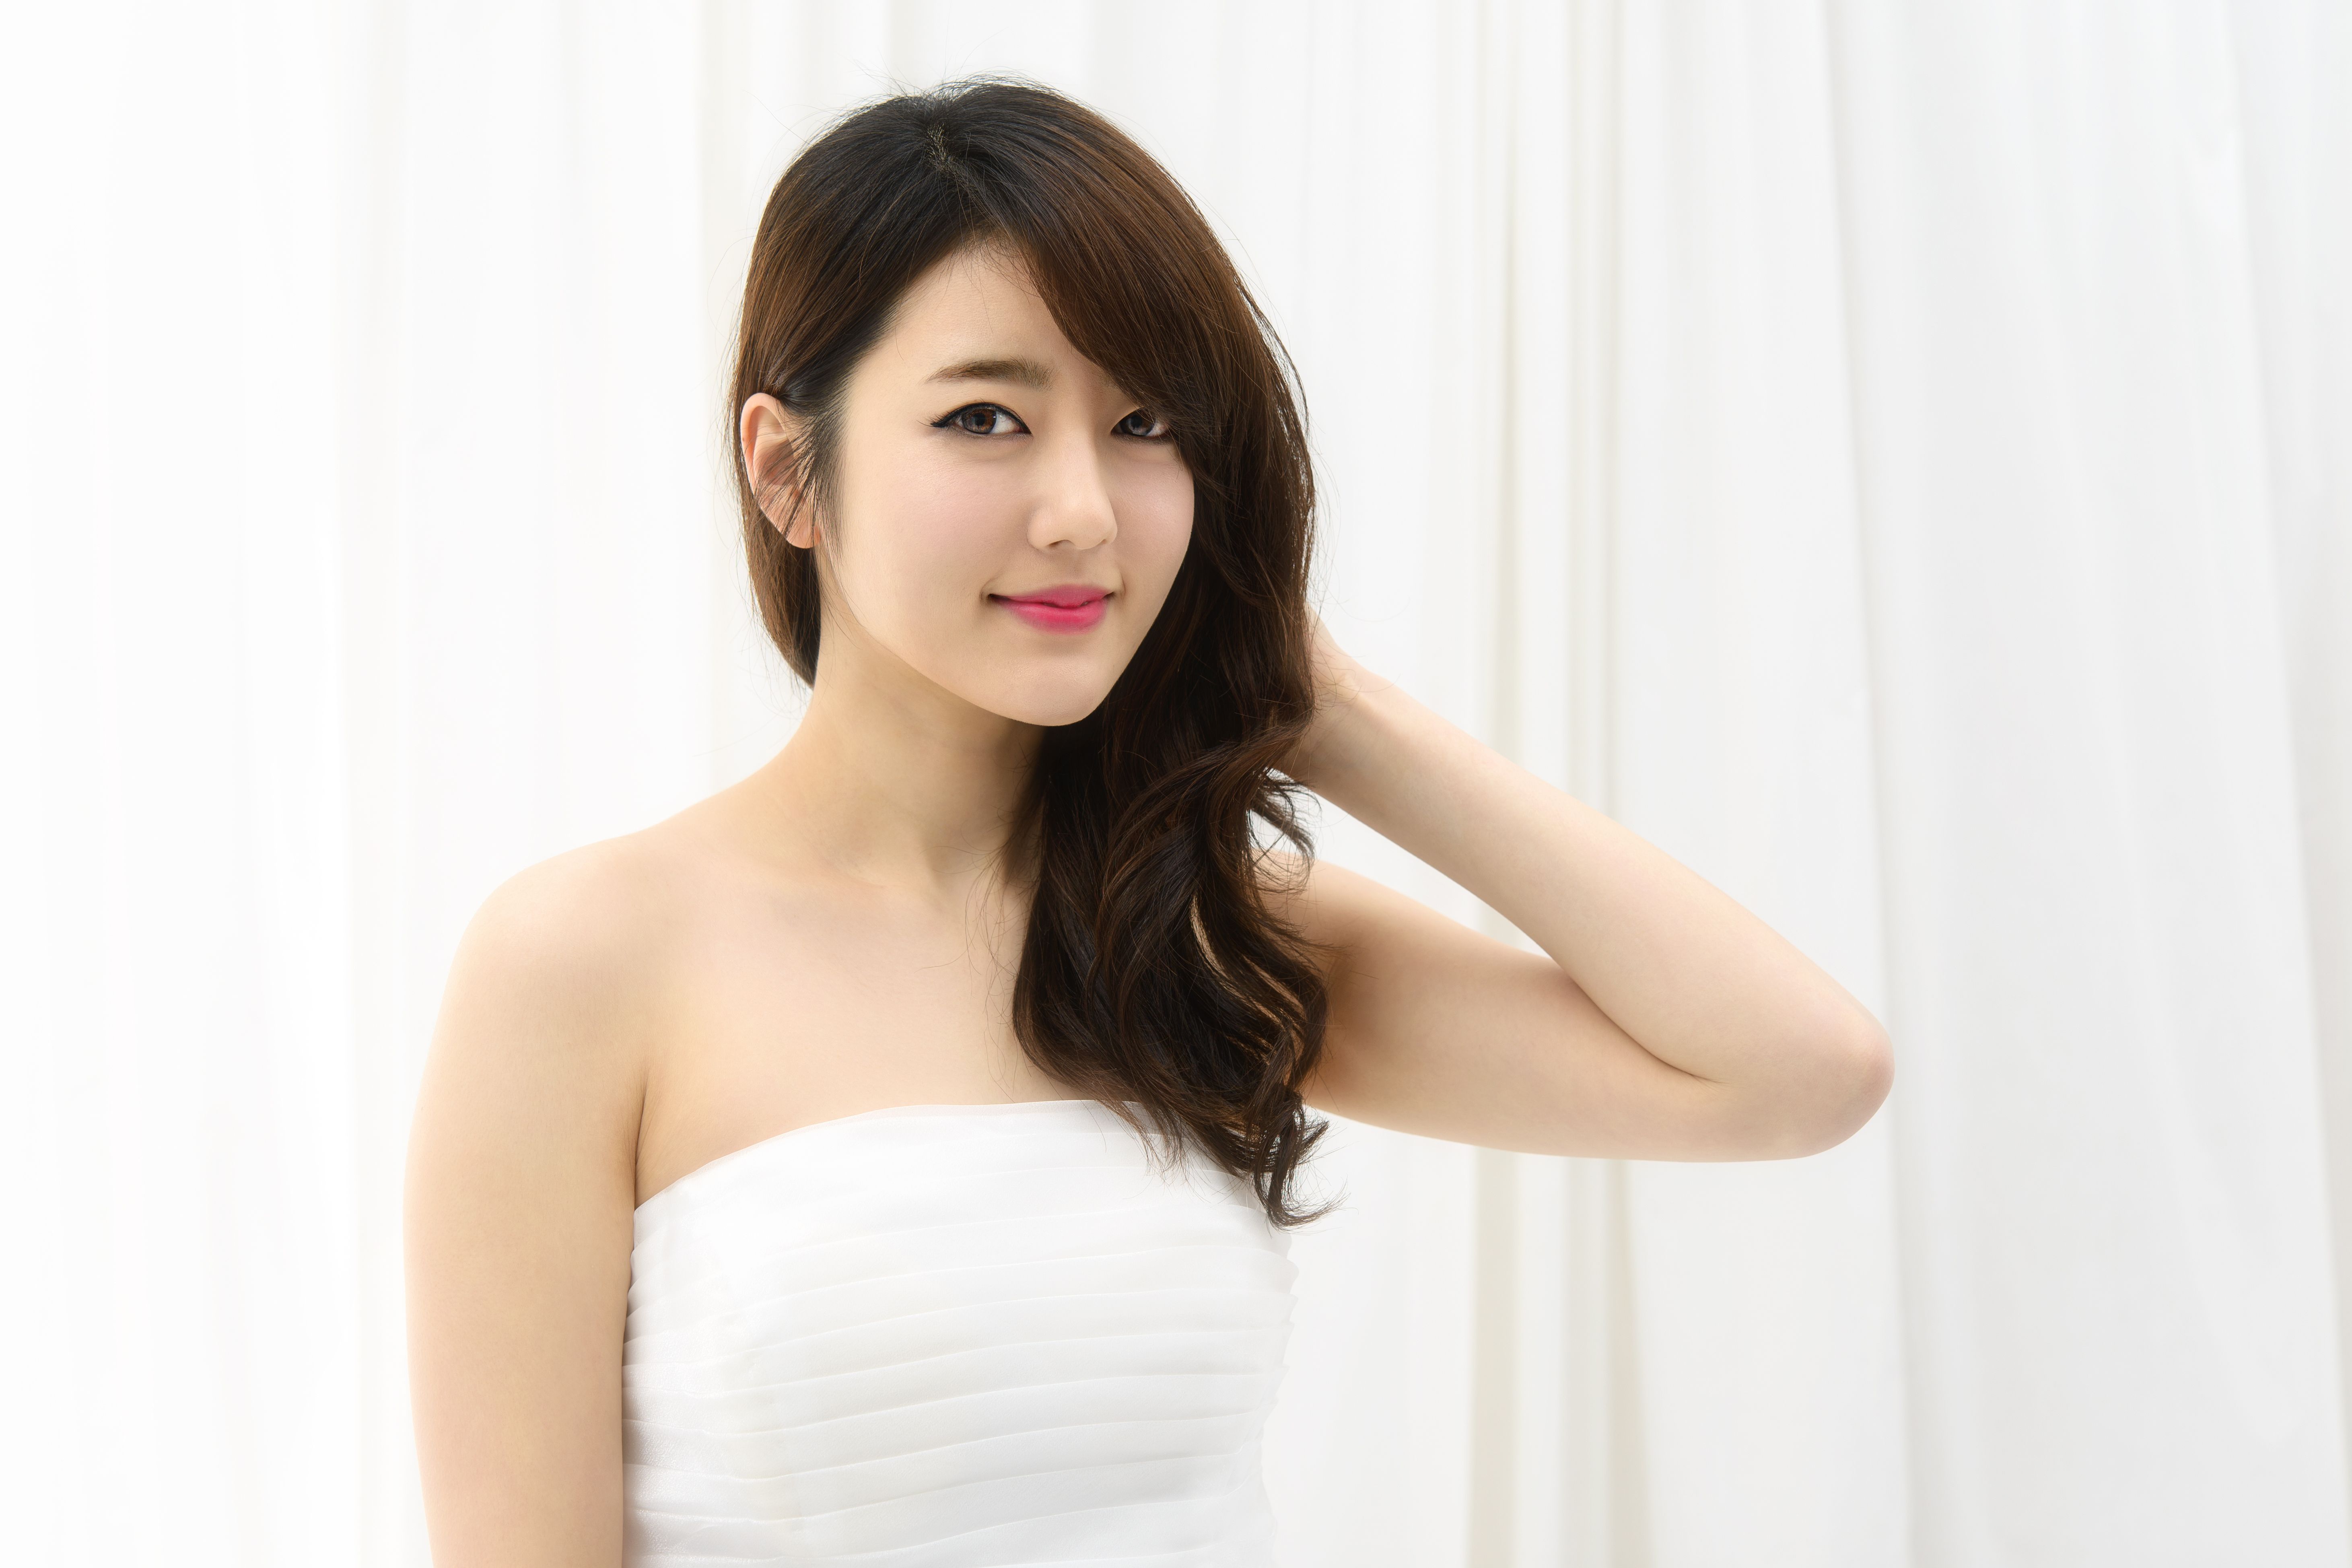 Korean model wallpaper and image wallpaper picture photo. Korean model, Model, Strapless top